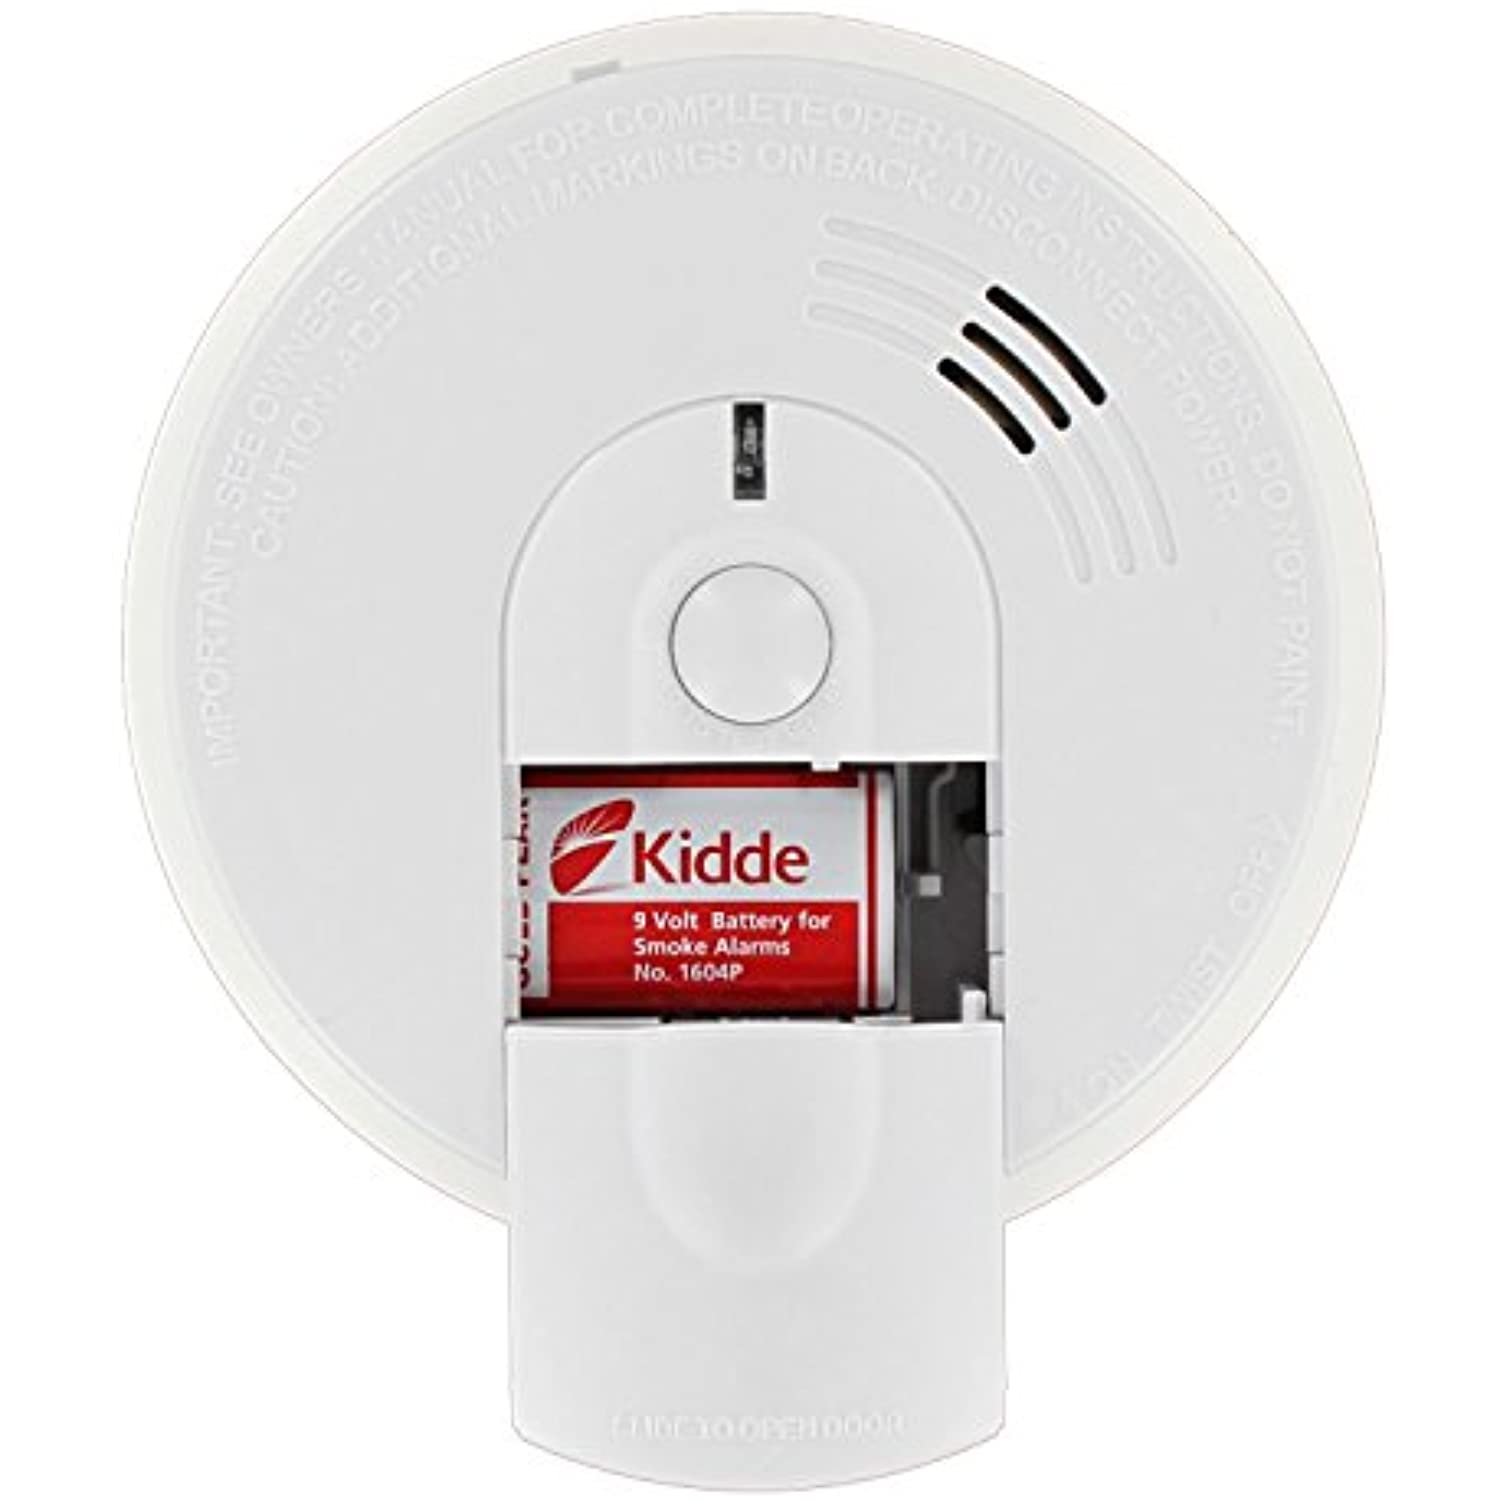 Kidde I4618AC firex Hardwire Smoke Alarm Fire and Safety Plus